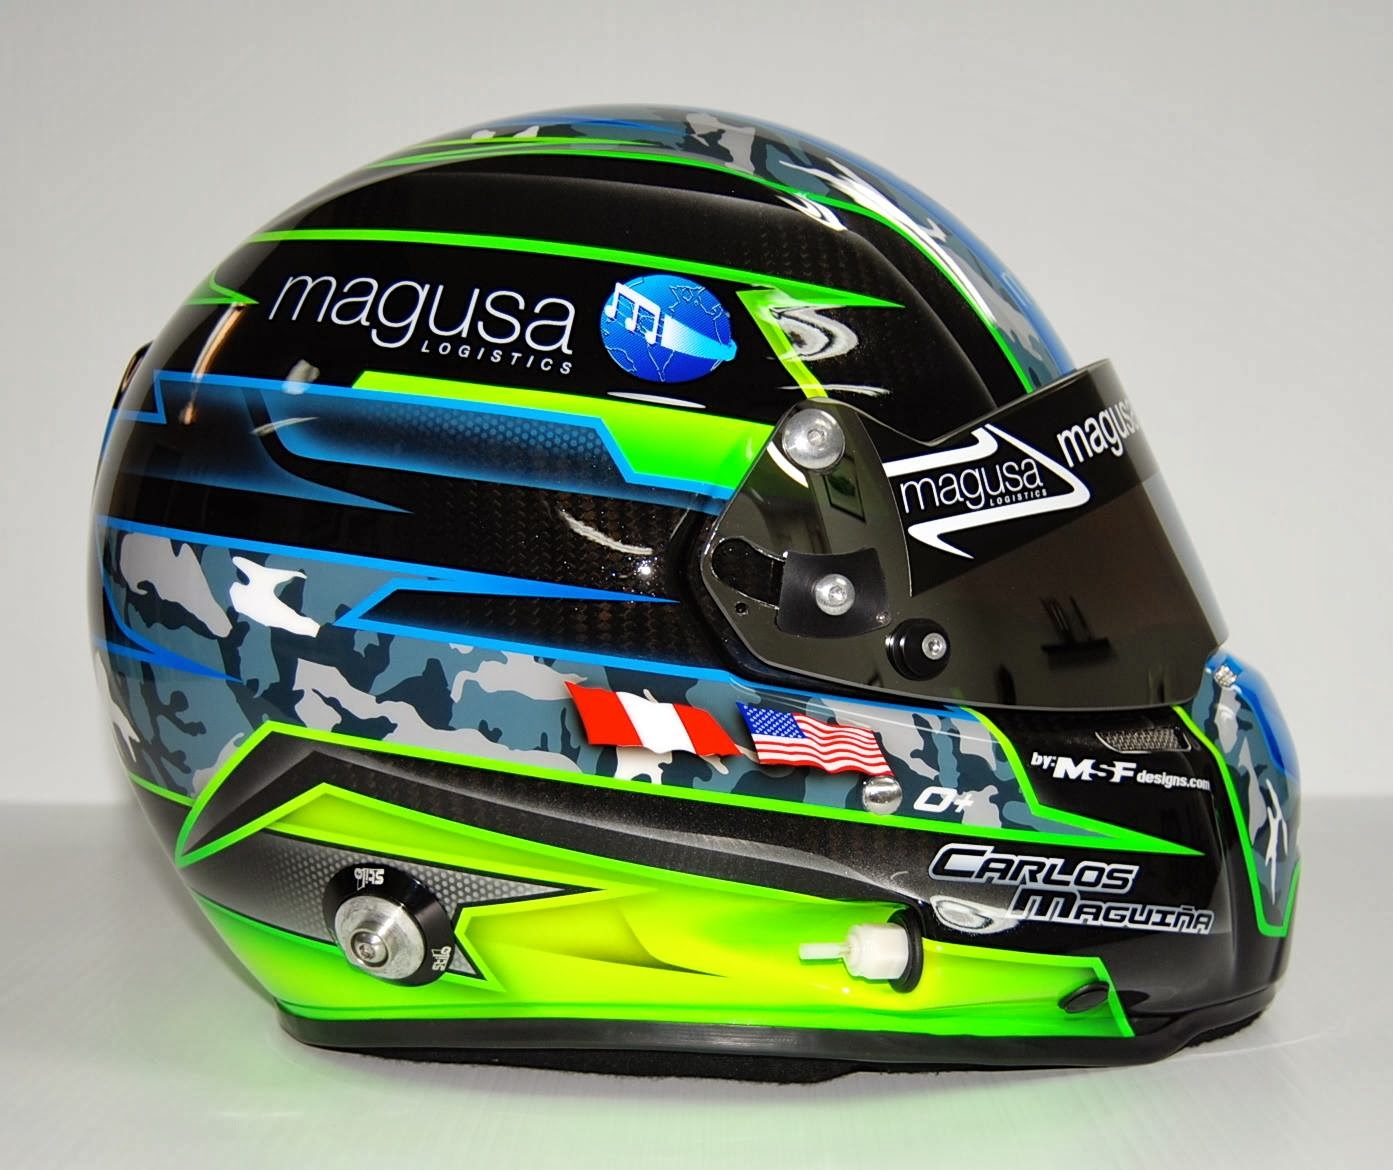 Racing Helmets Garage: Stilo ST4 C.Maguiña 2013 by MSF-Designs